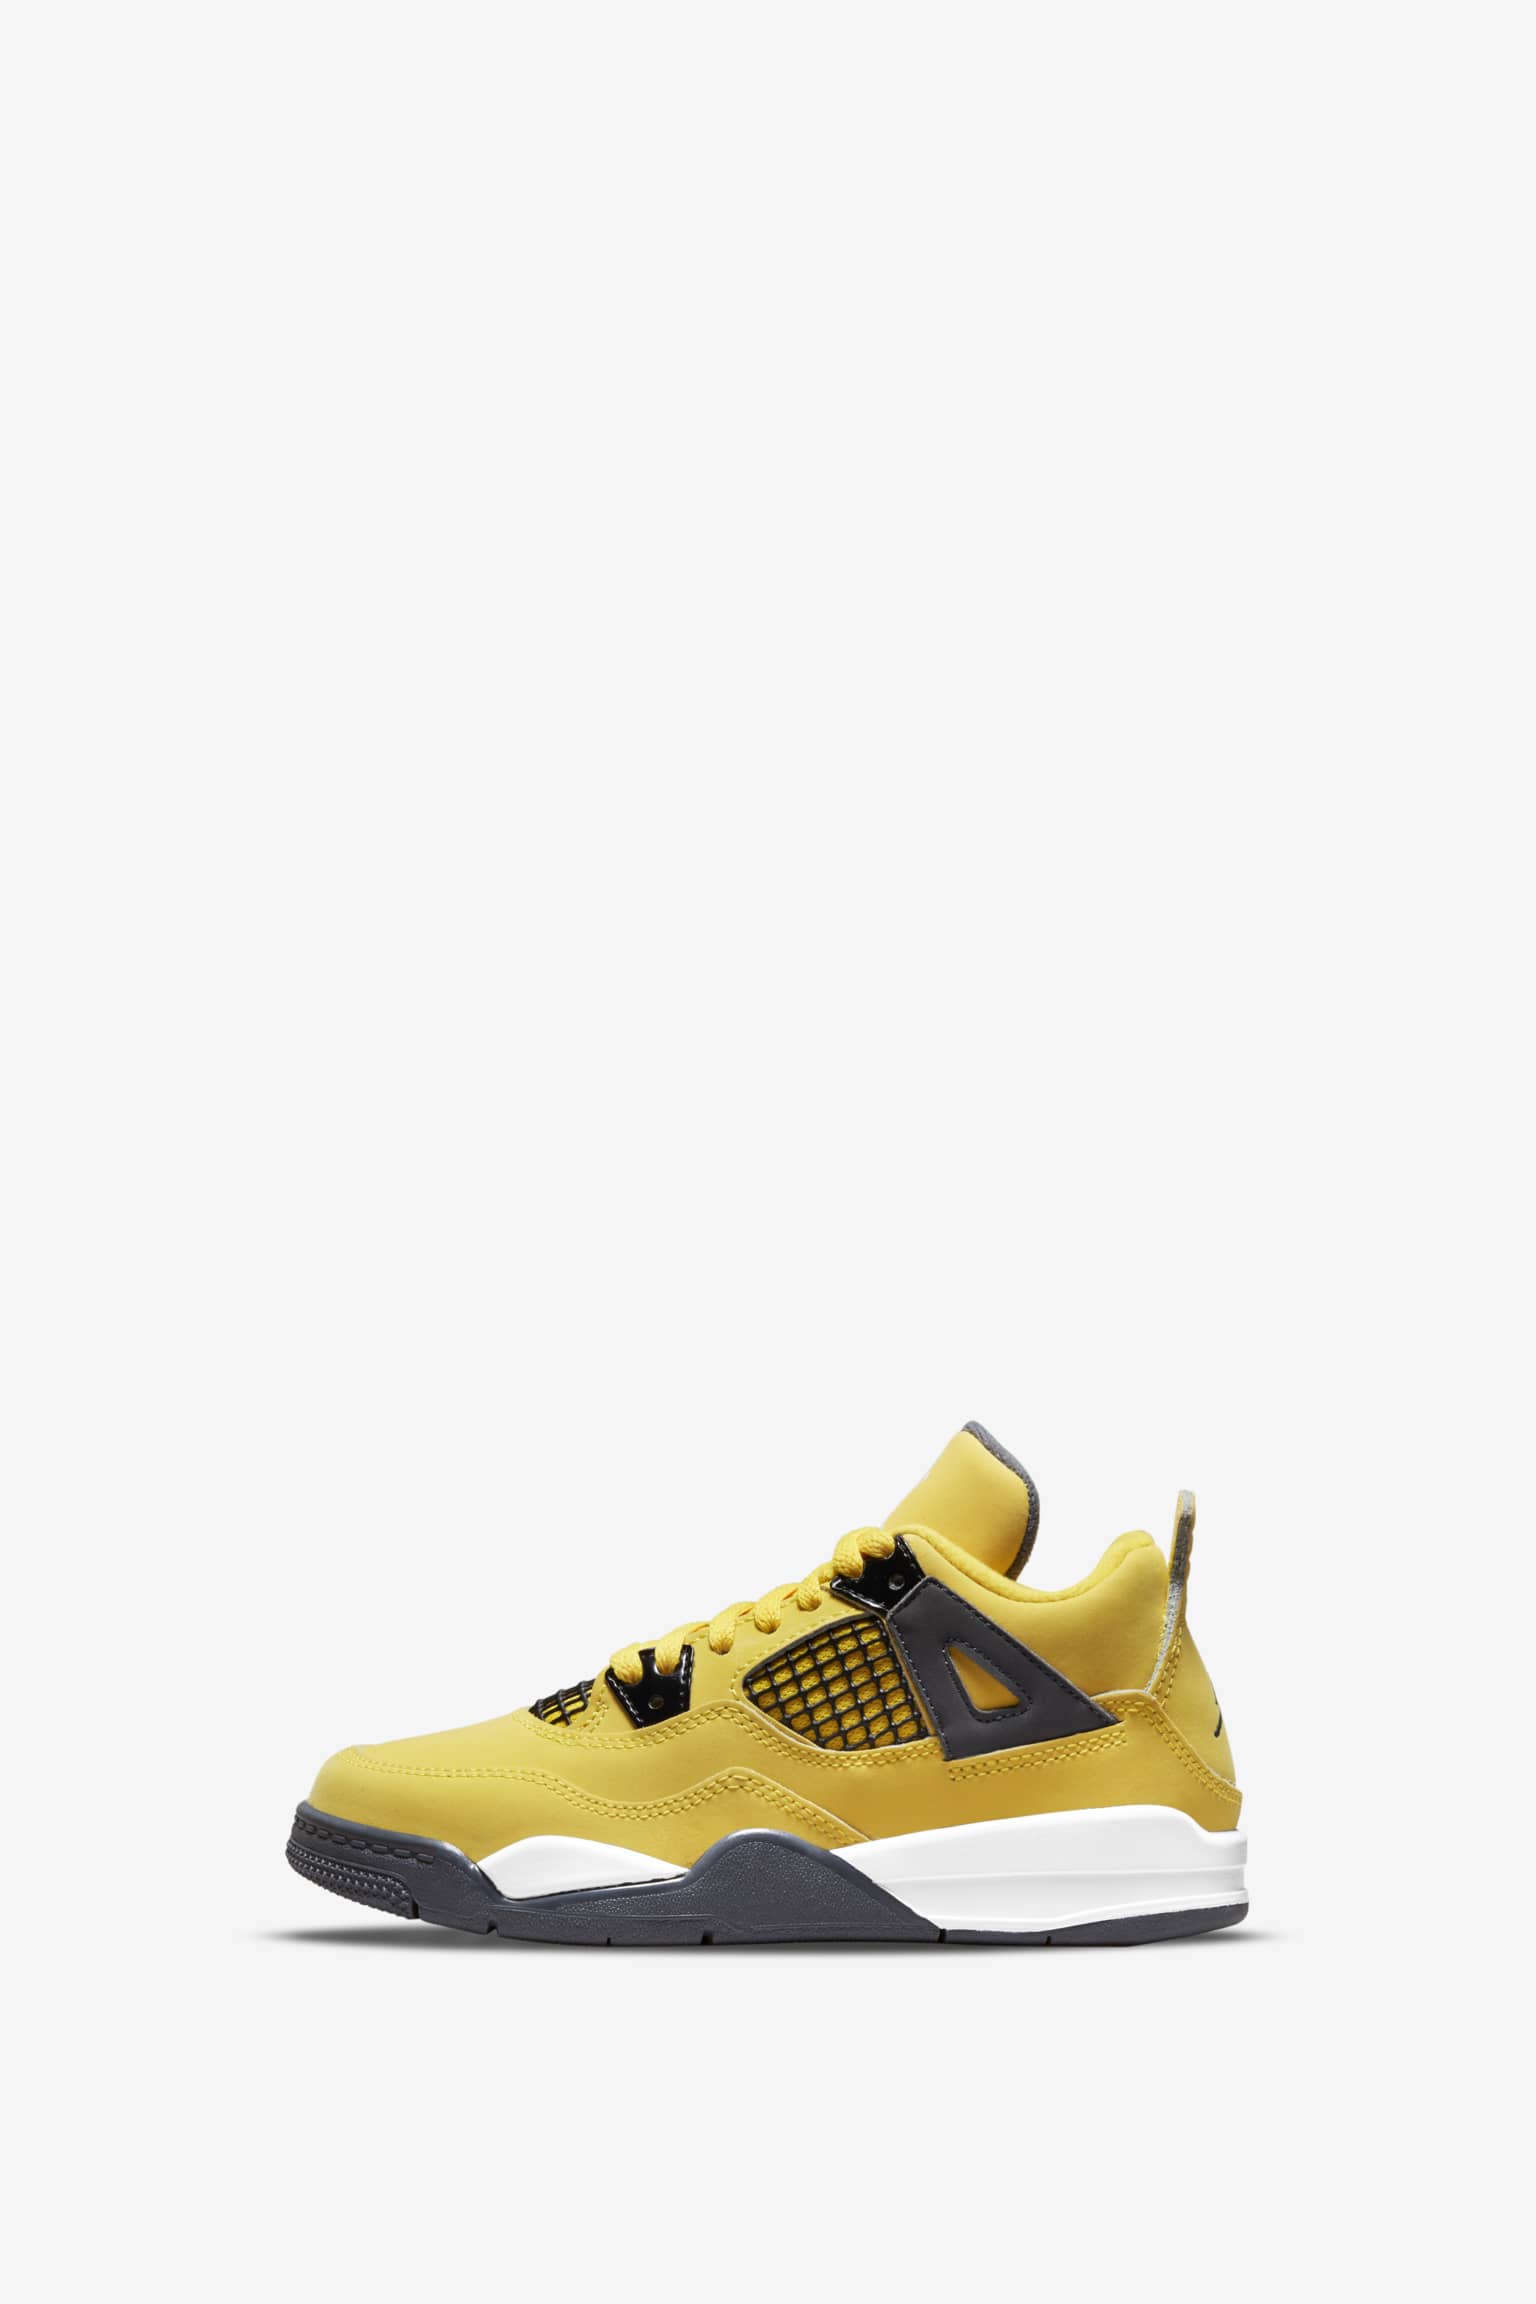 NIKE公式】エア ジョーダン 4 'Tour Yellow' (CT8527-700 / AJ 4 RETRO). Nike SNKRS JP